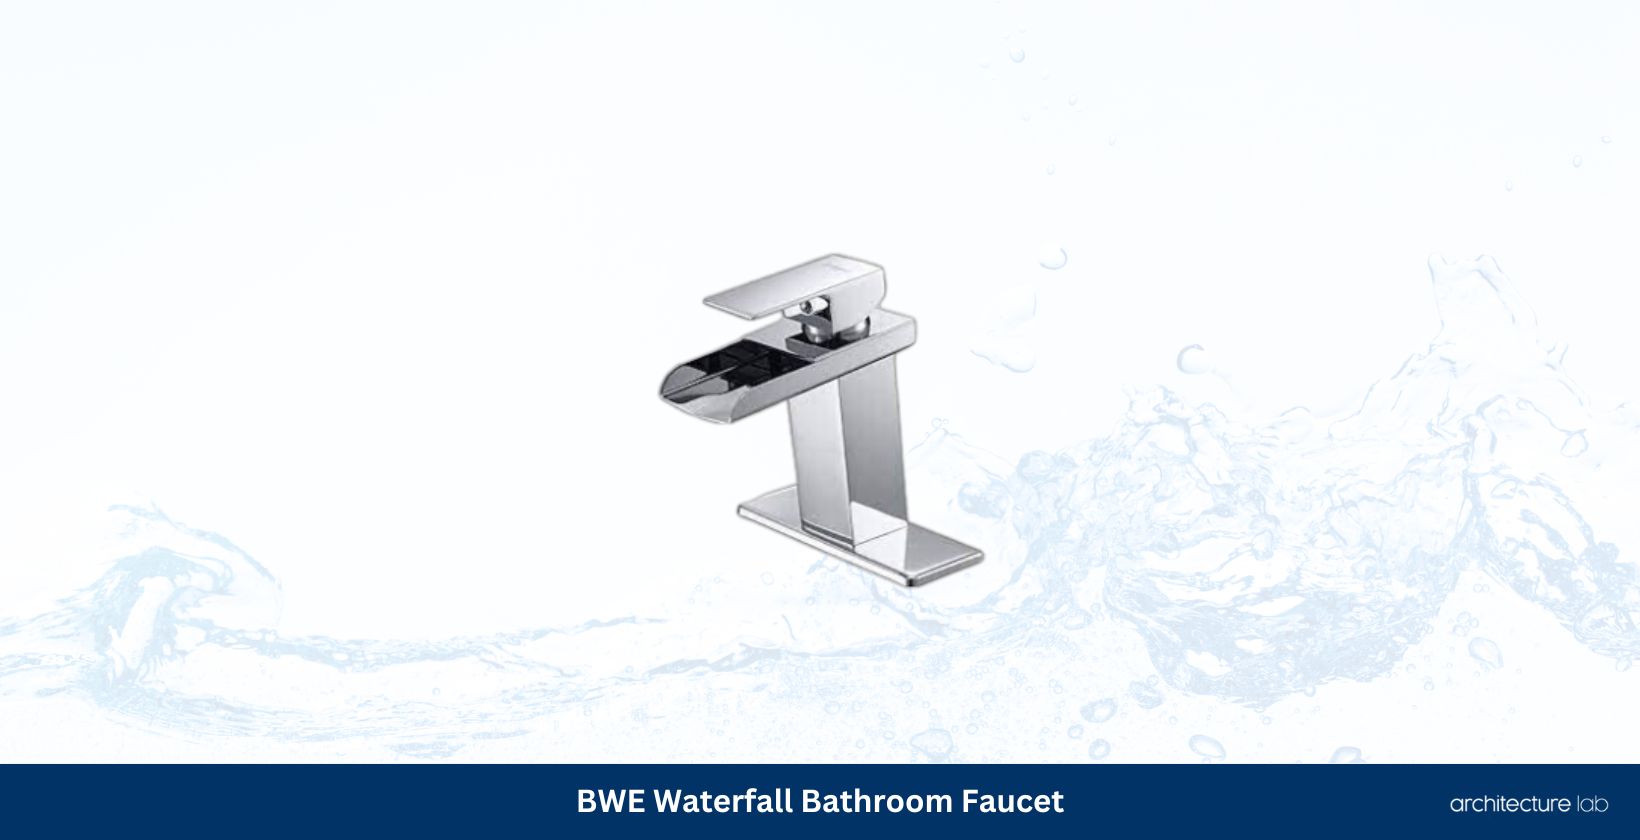 Bwe waterfall bathroom faucet